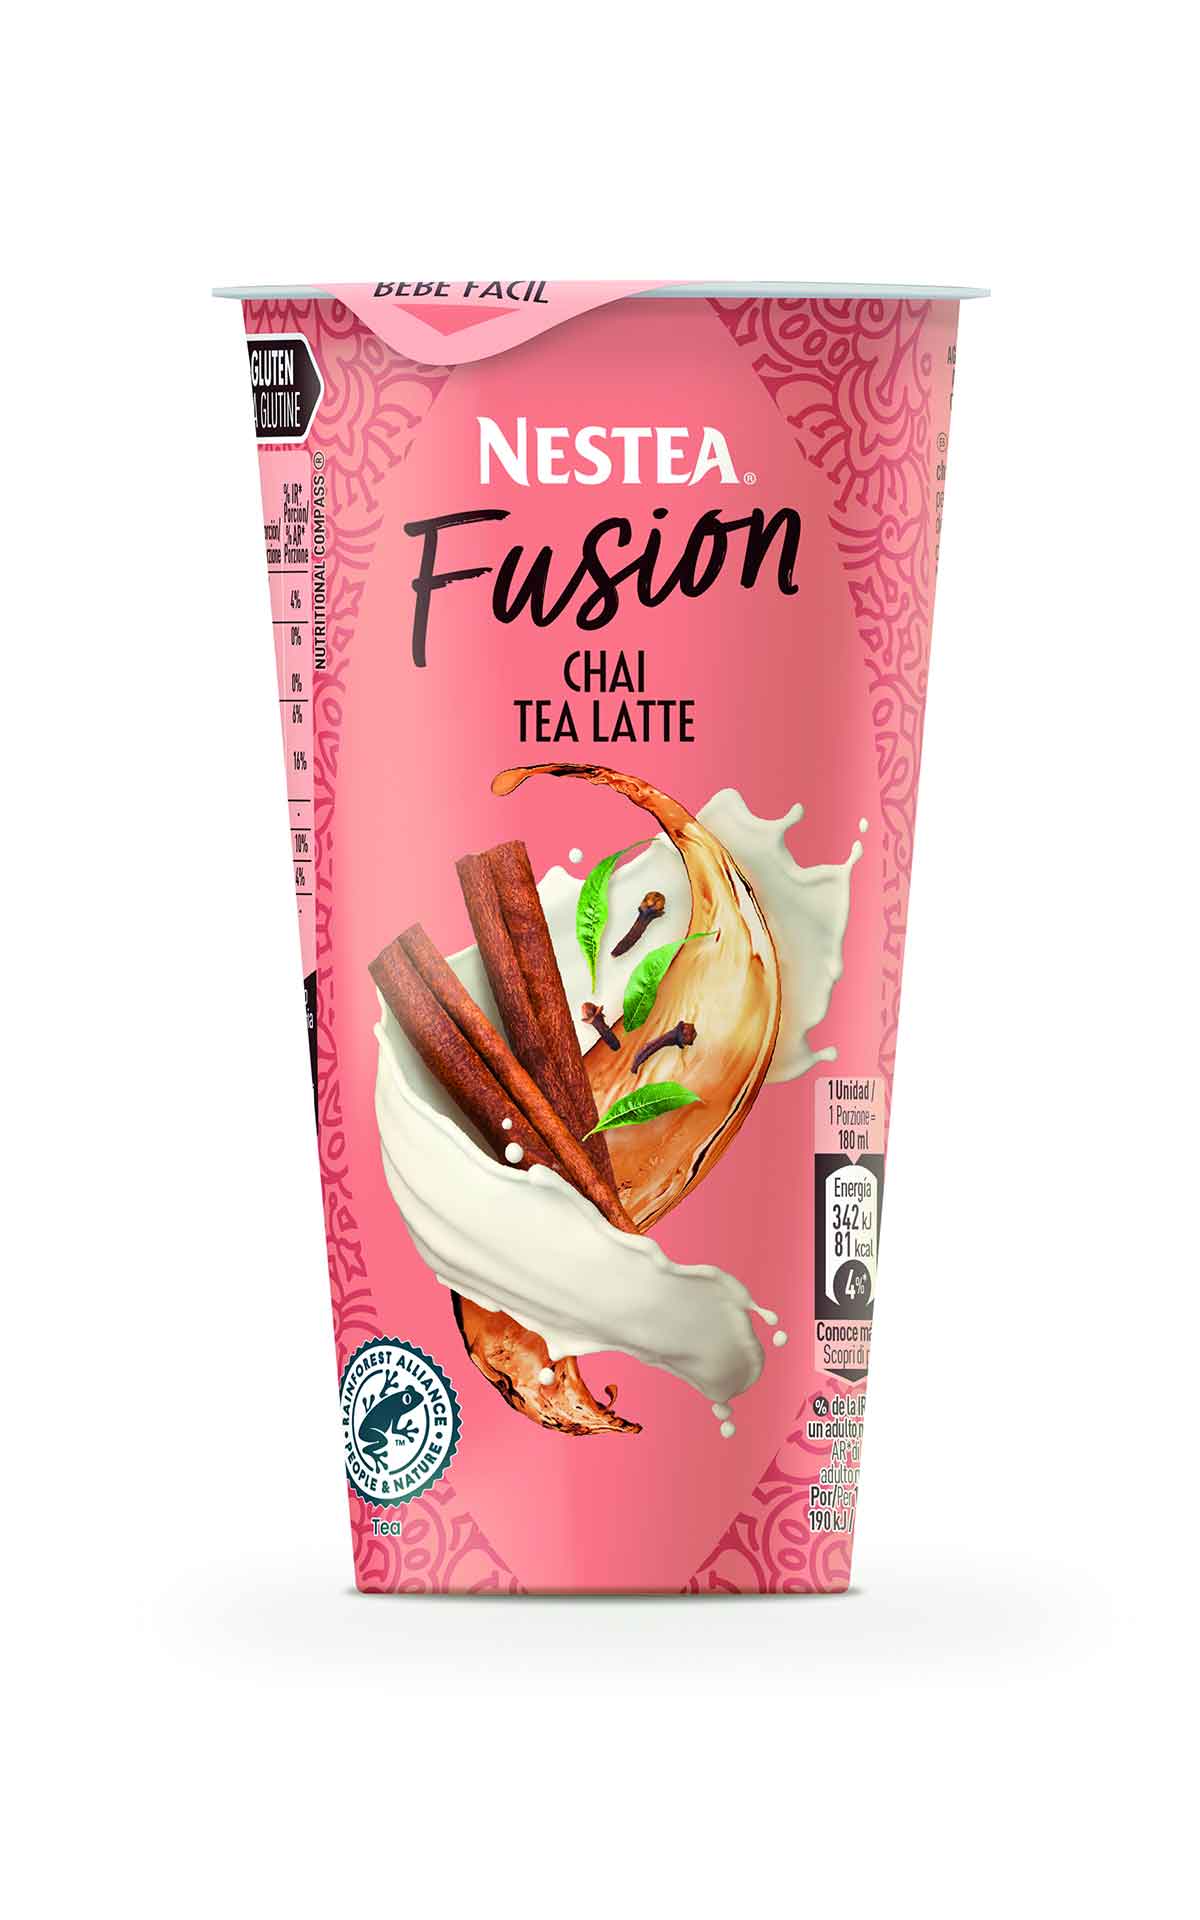 Nestea Fusion Chai Tea Latte